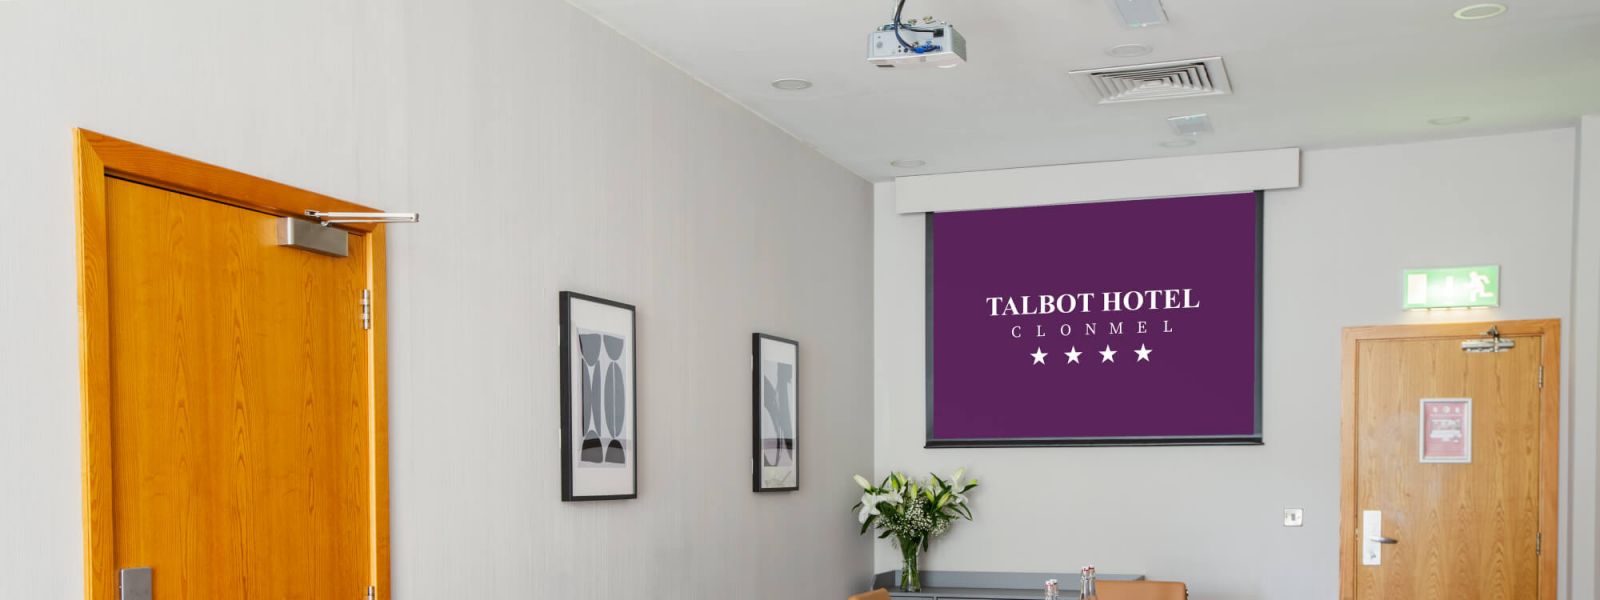 Executive Suite 7 - Board Room Talbot Hotel Clonmel (1)